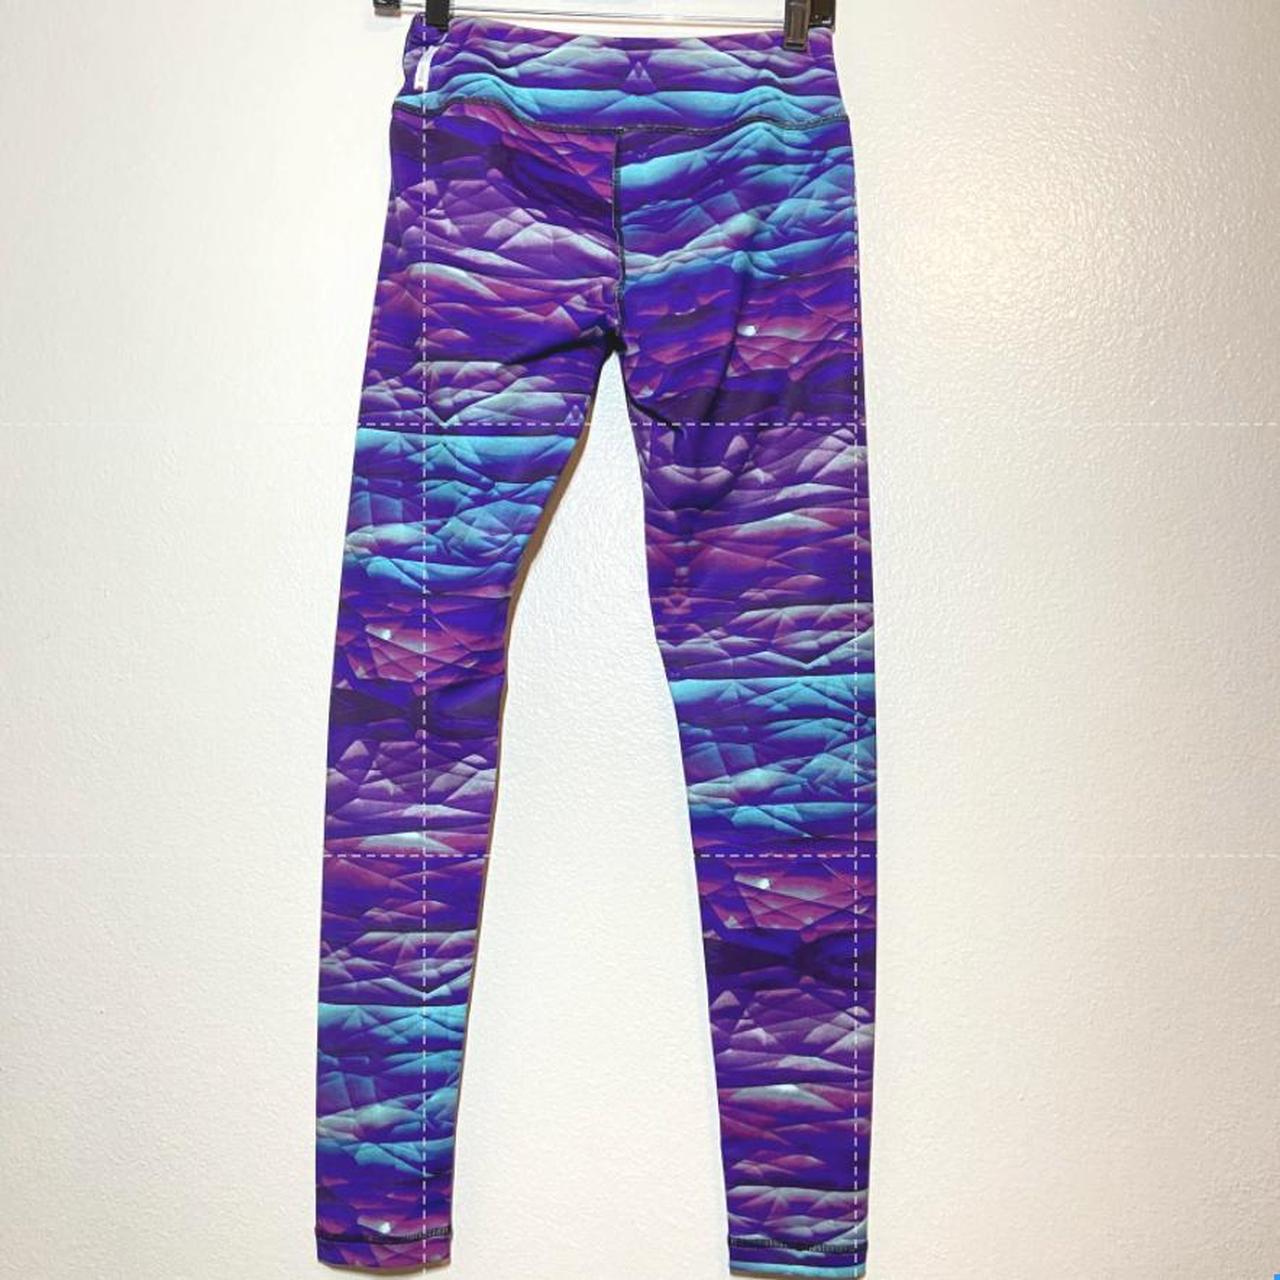 Zella purple leggings - Gem